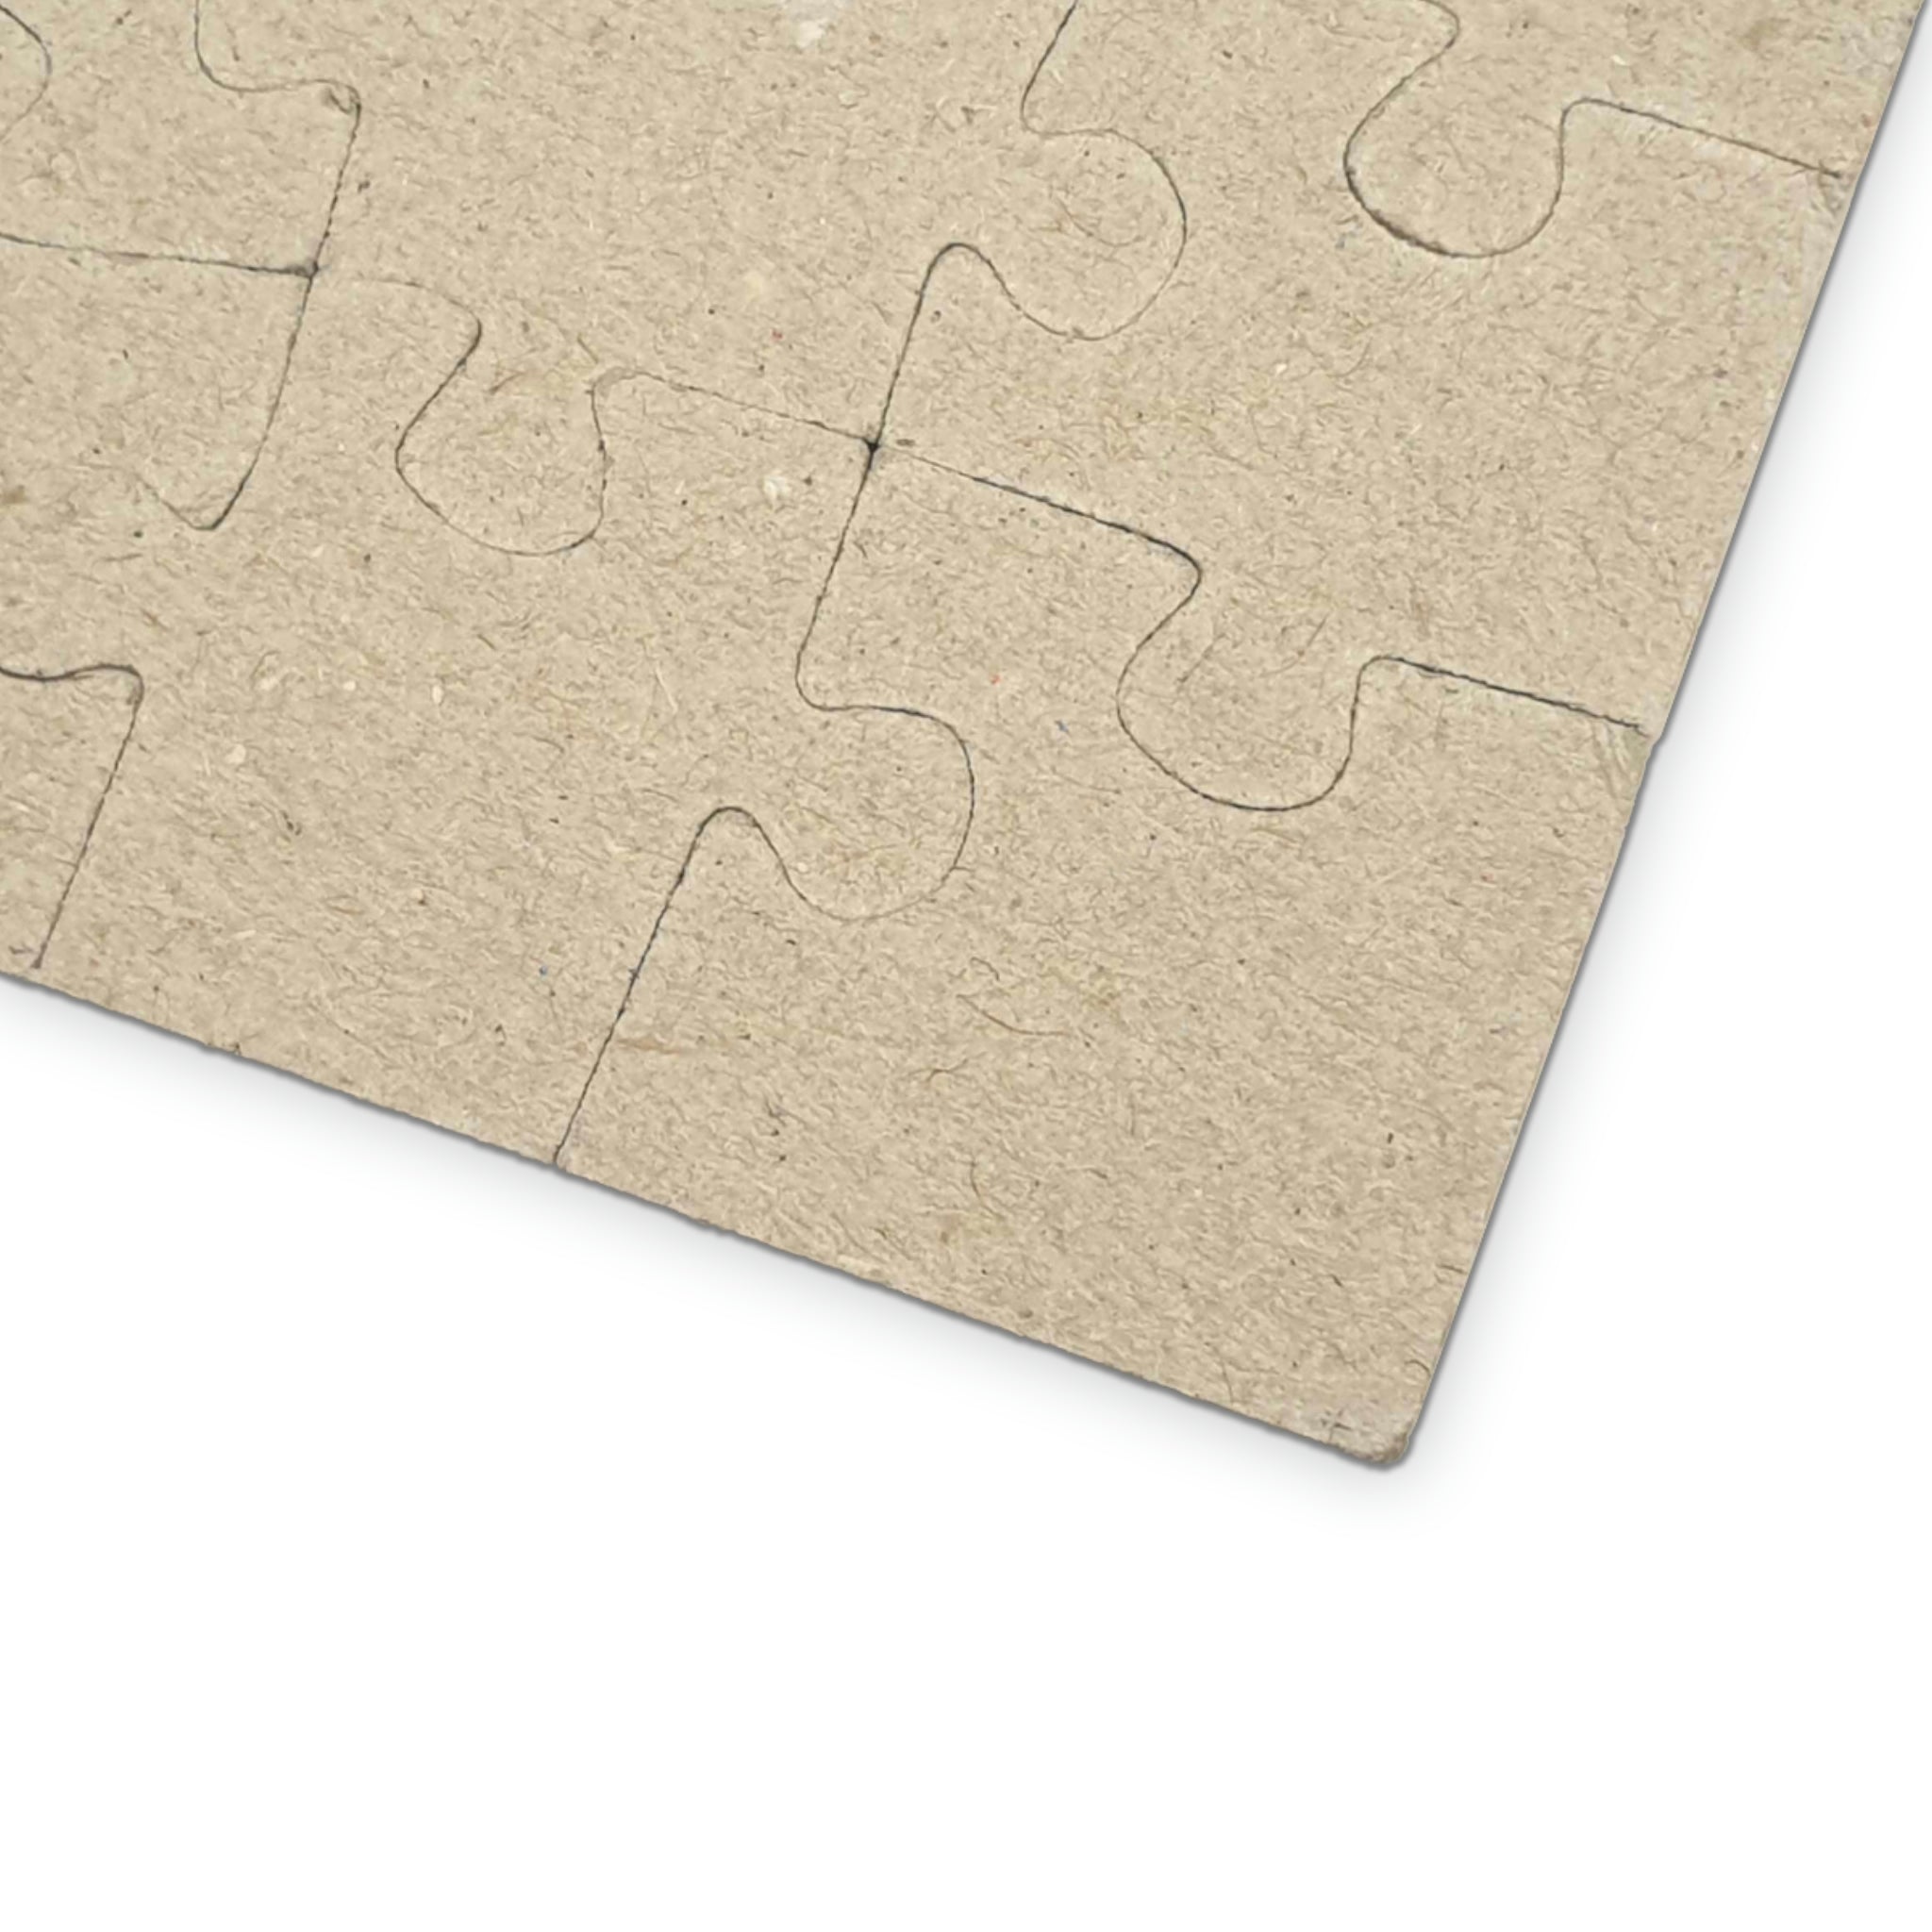 Roylco Blank Puzzle Pieces - 4 x 4, Pkg of 32